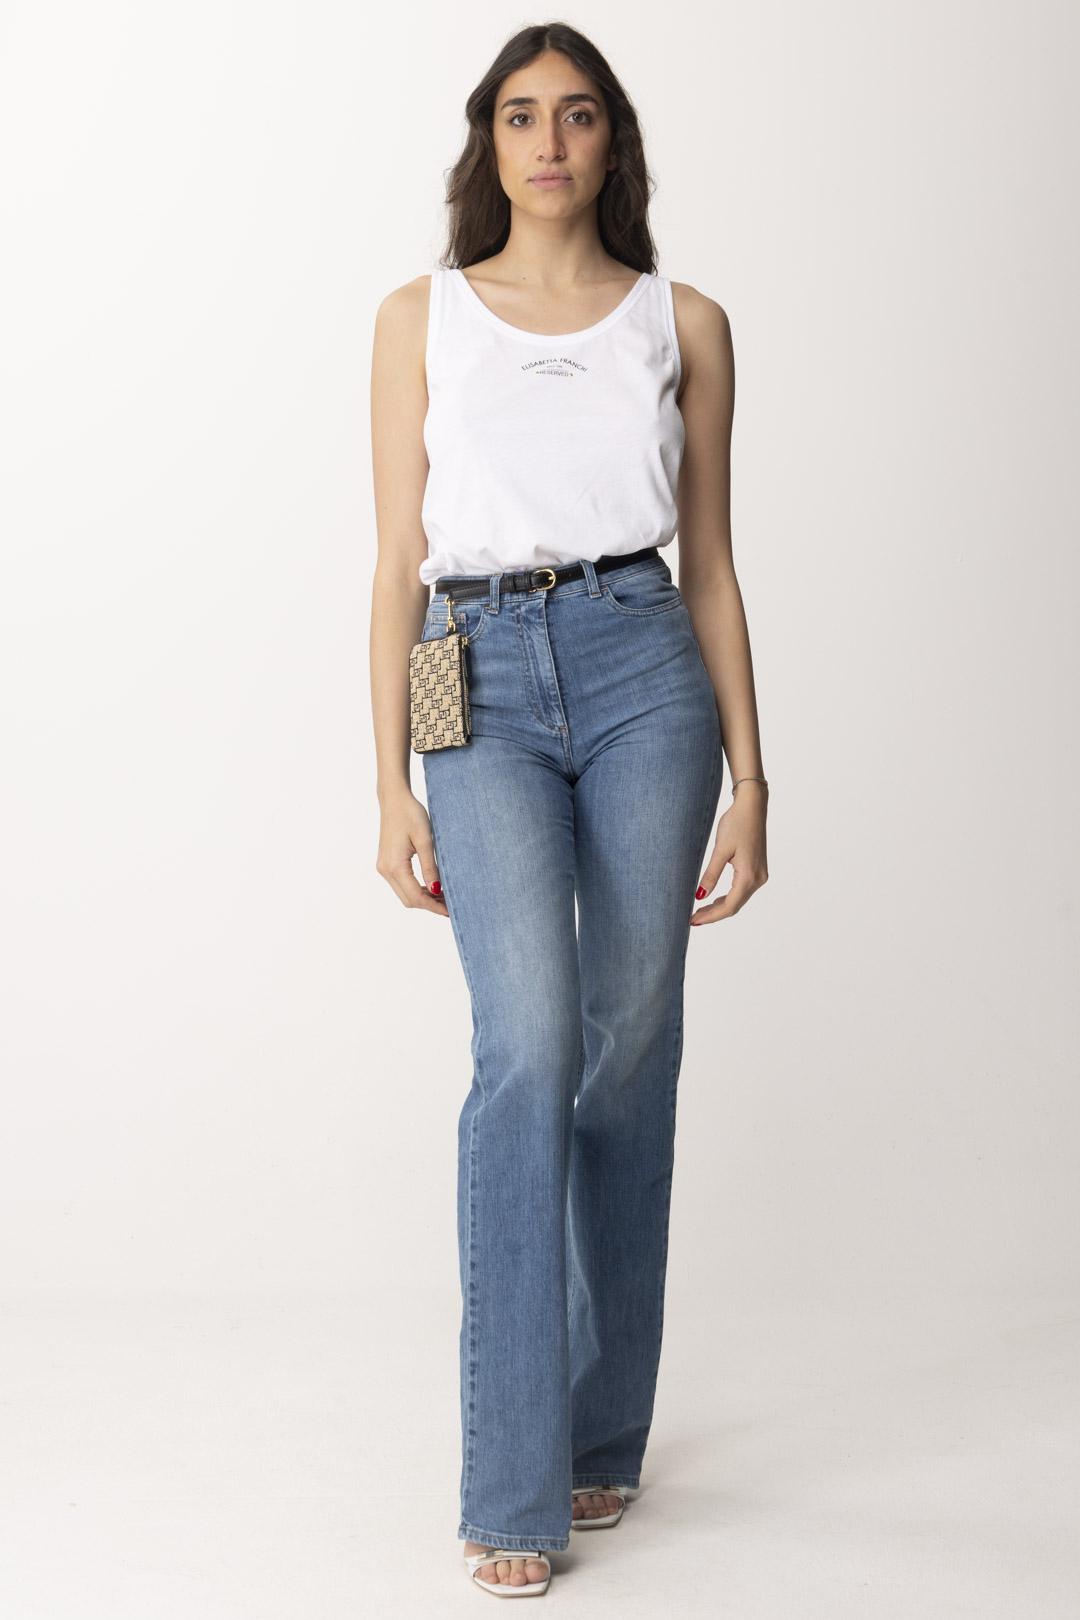 Anteprima: Elisabetta Franchi Jeans a zampetta con cintura Light blue